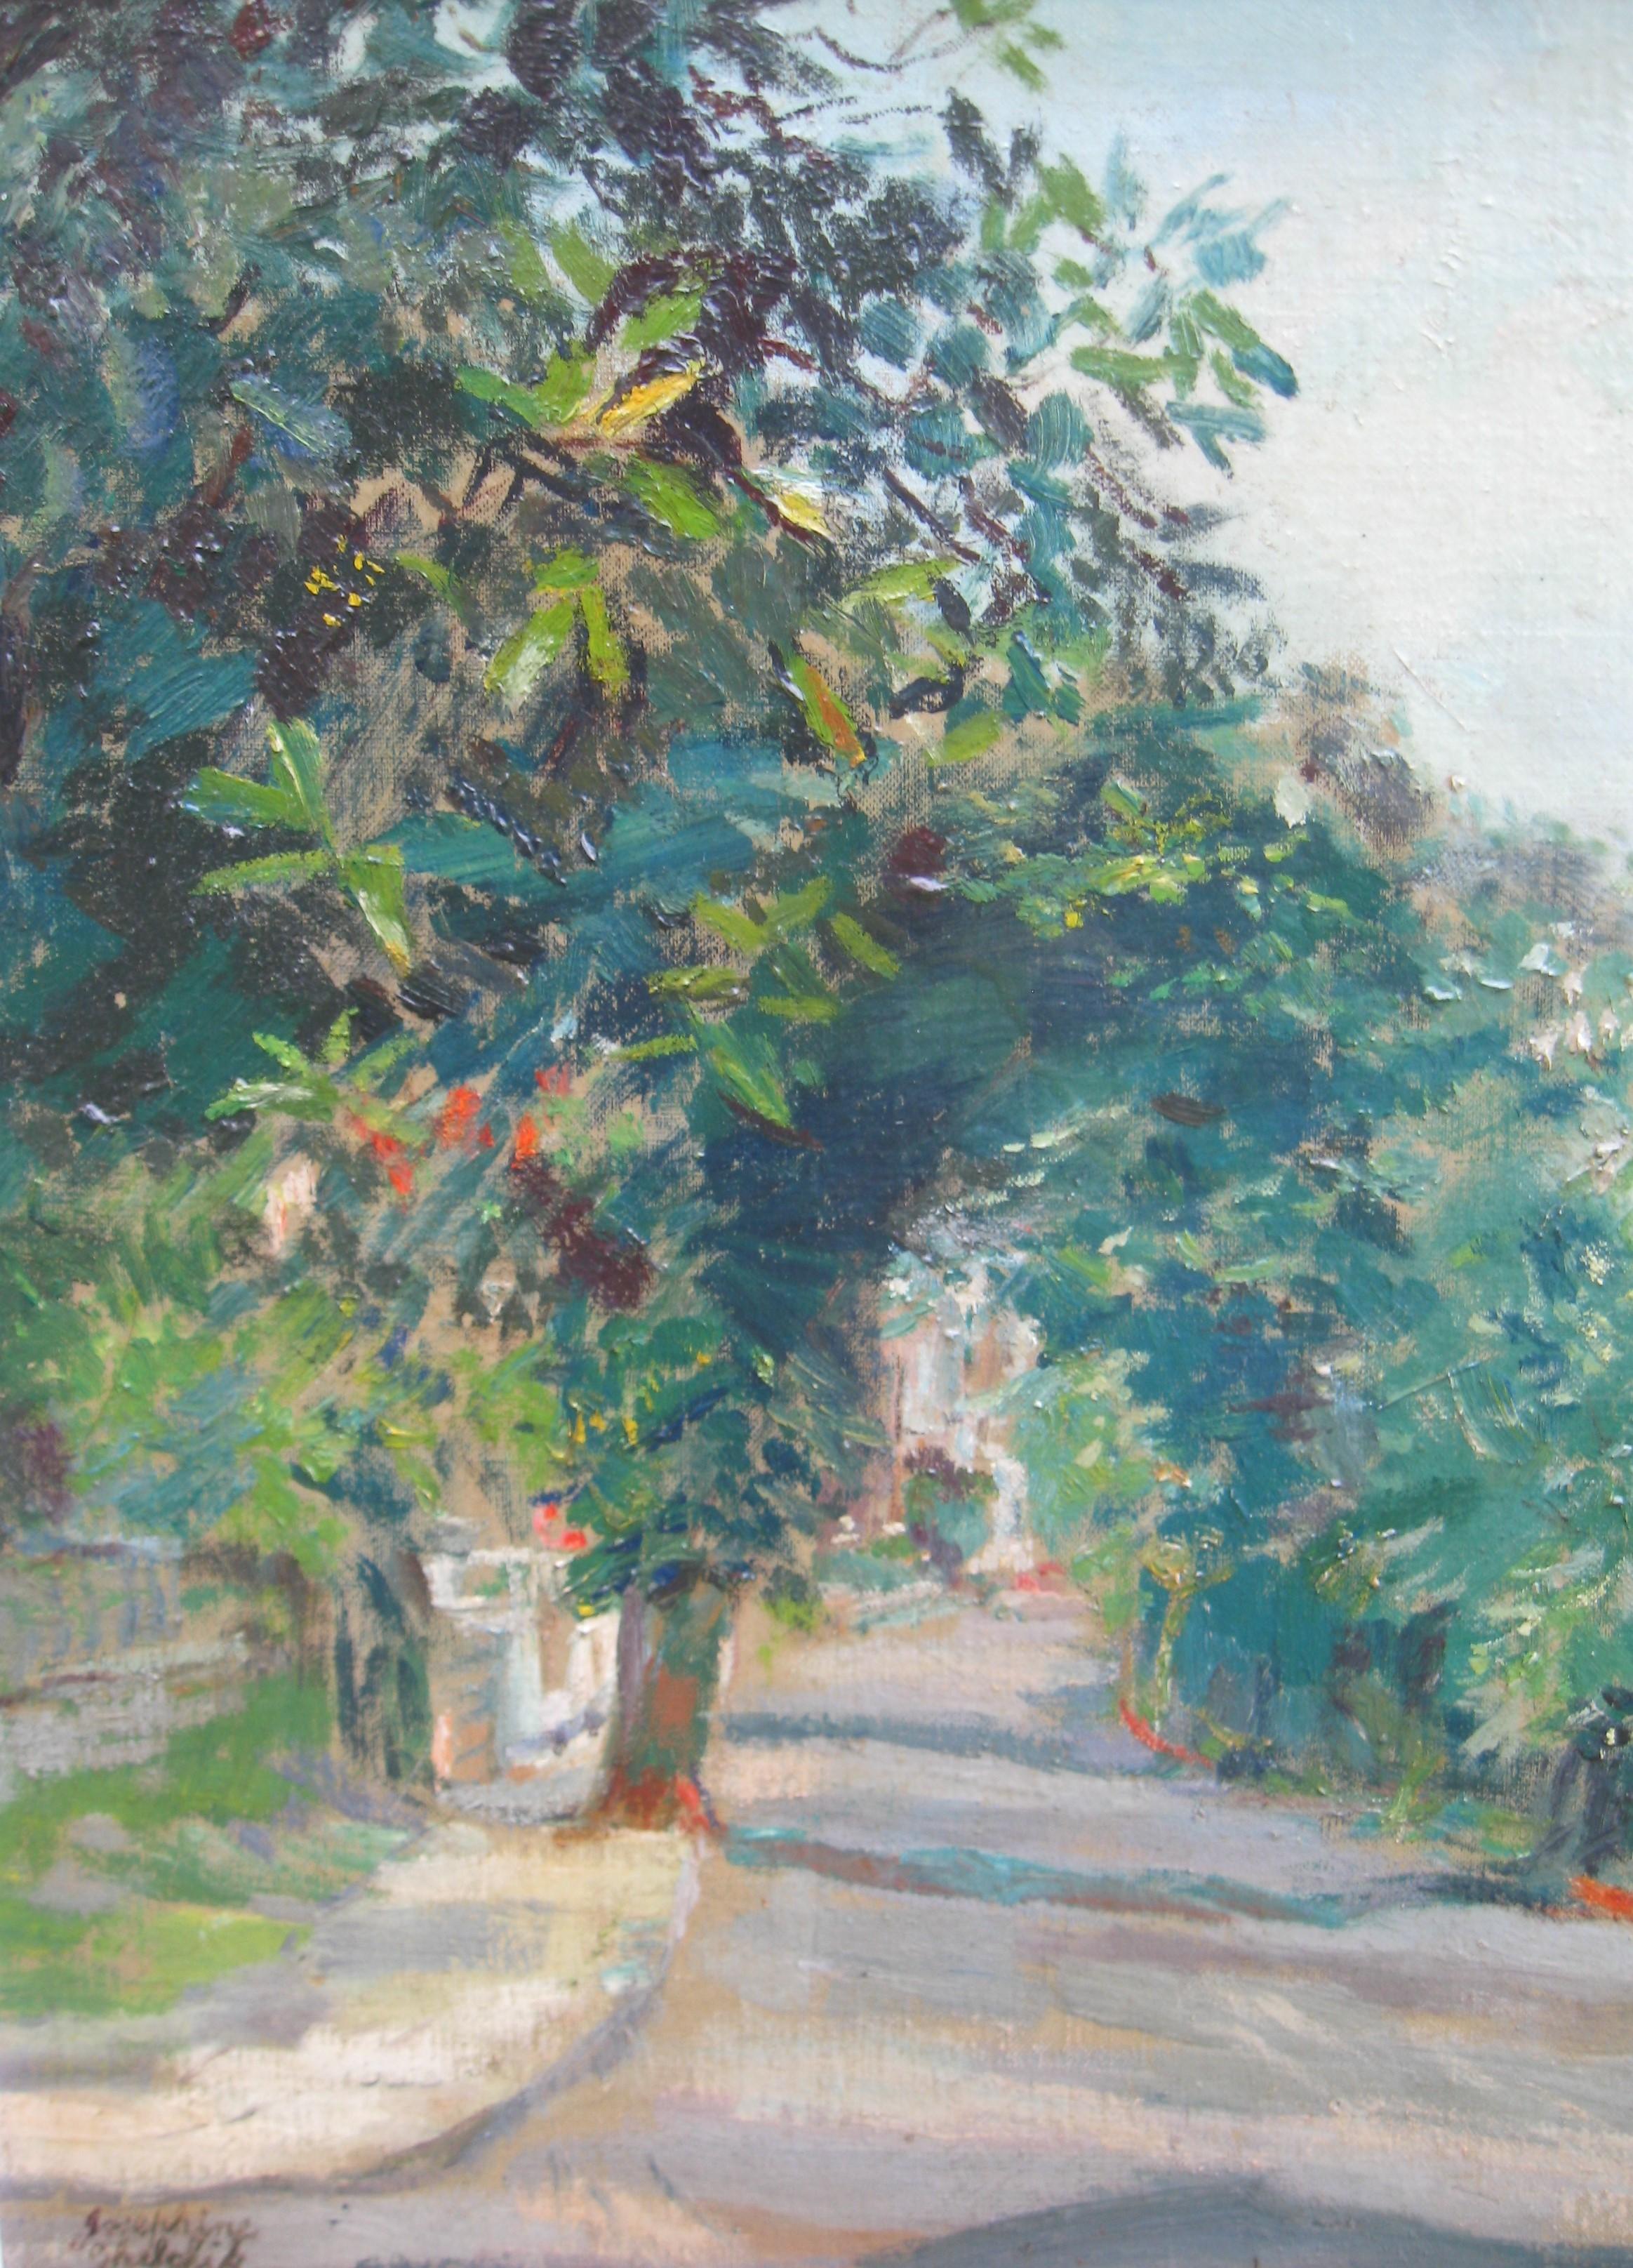 Impressionist: Sunny Day by The Thames, Öl ca. 1930er Jahre (Grau), Landscape Painting, von Unknown